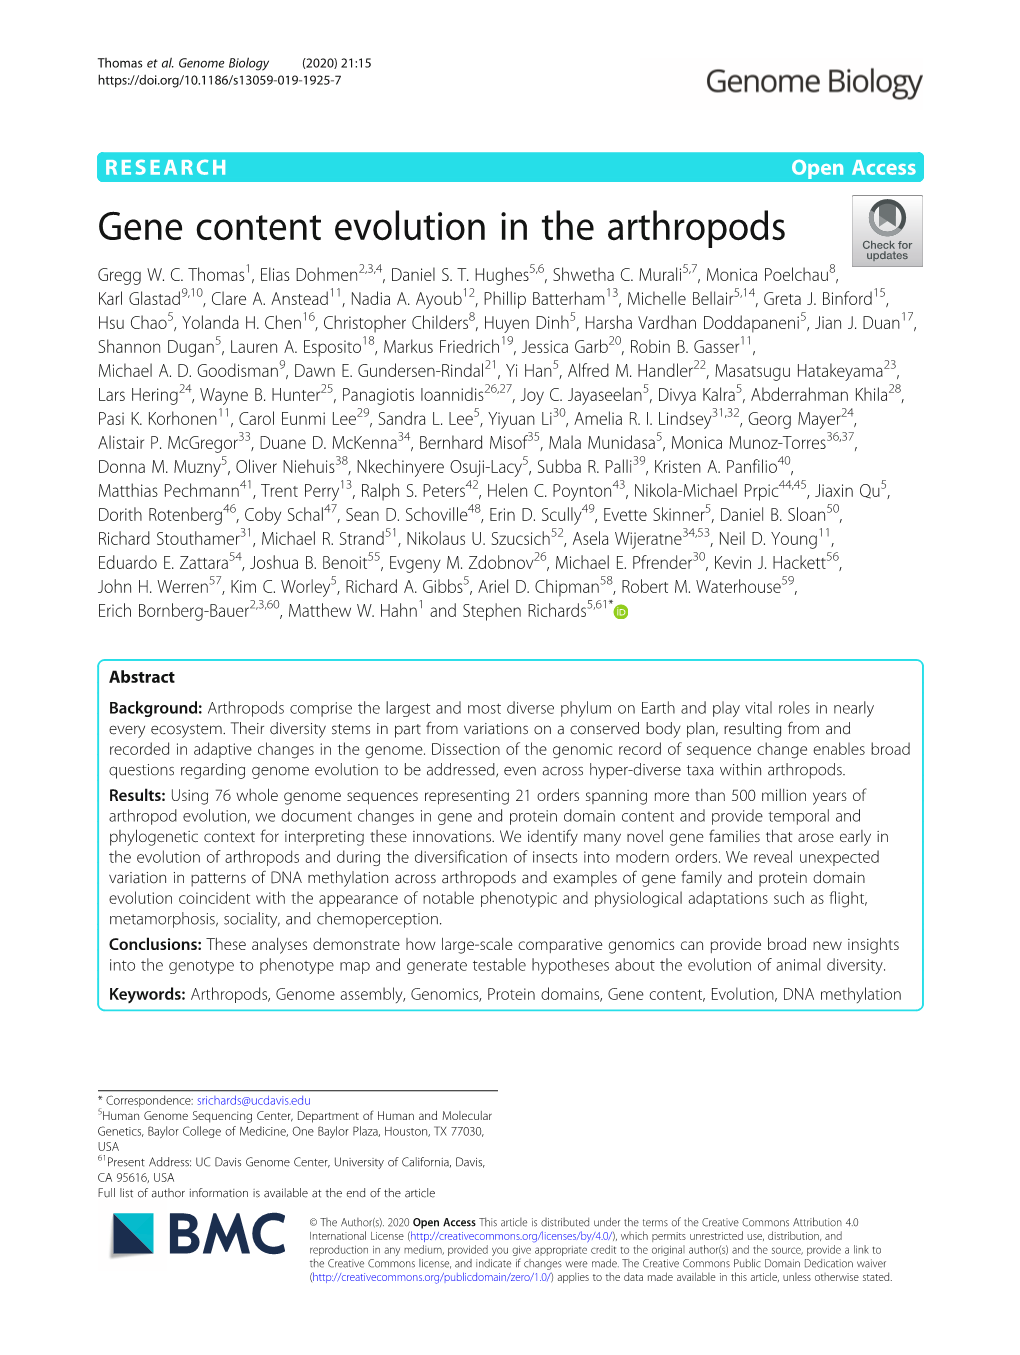 Gene Content Evolution in the Arthropods Gregg W